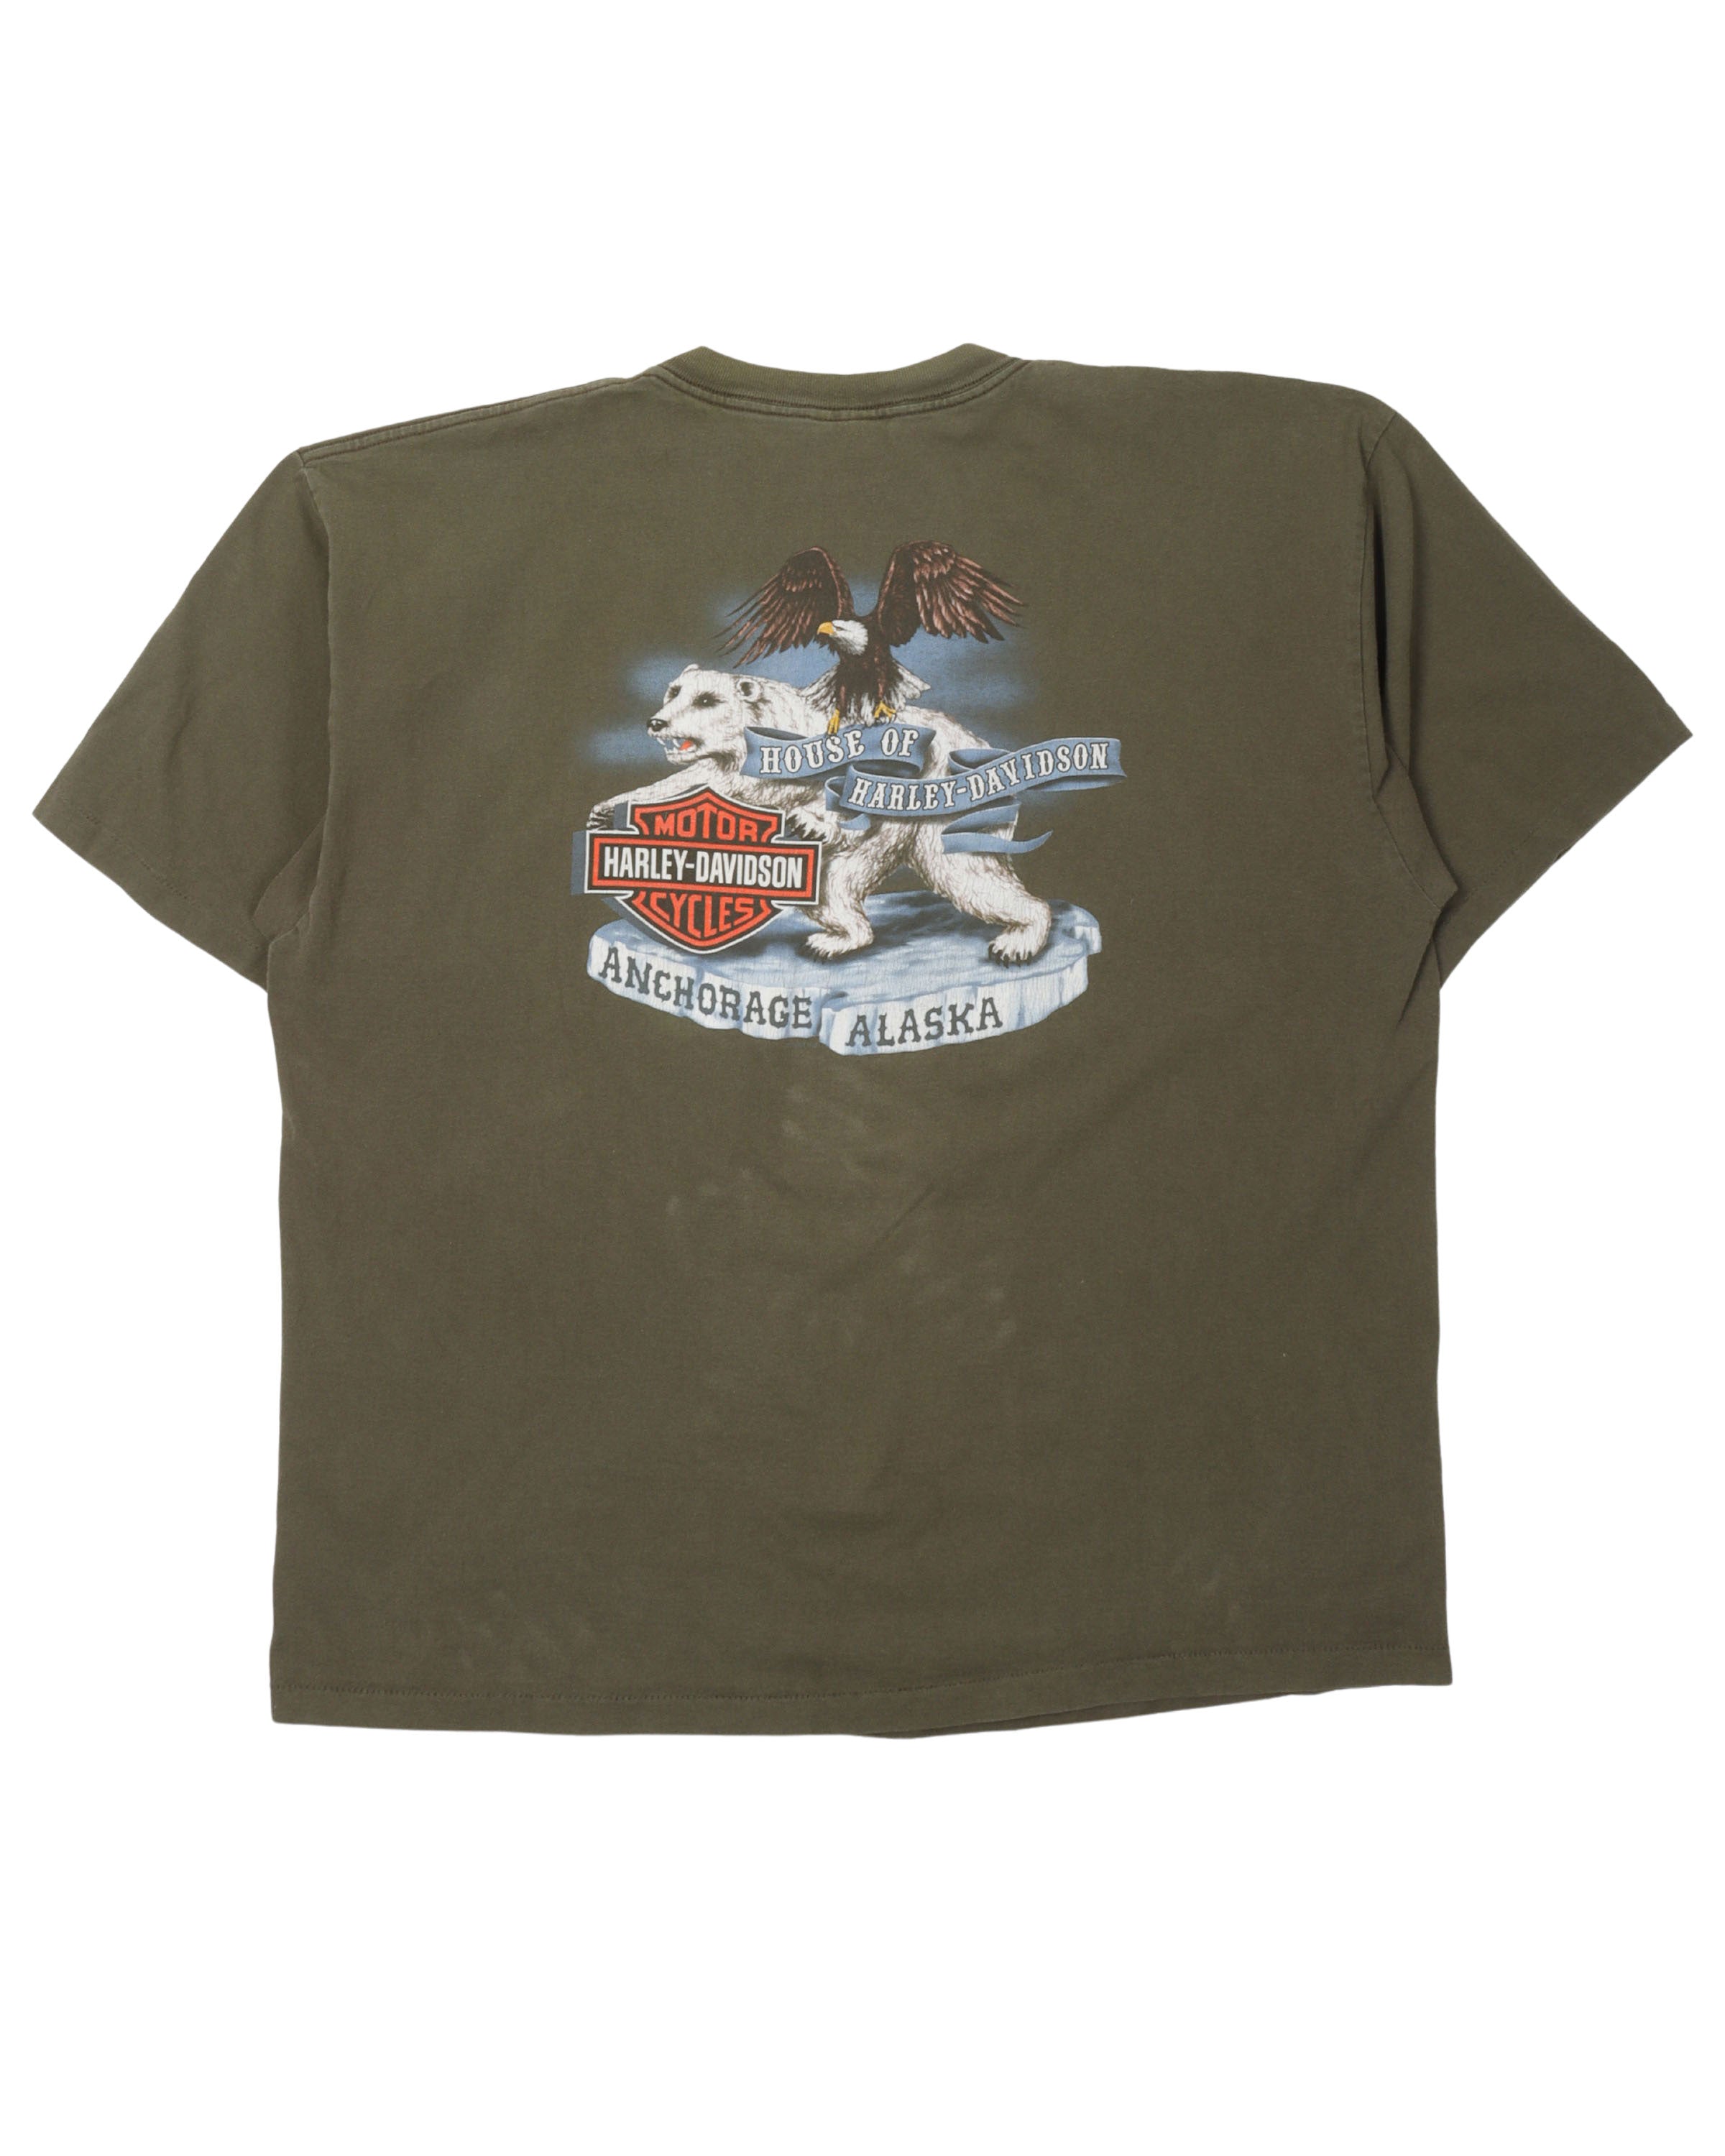 Harley Davidson Anchorage Alaska T-Shirt